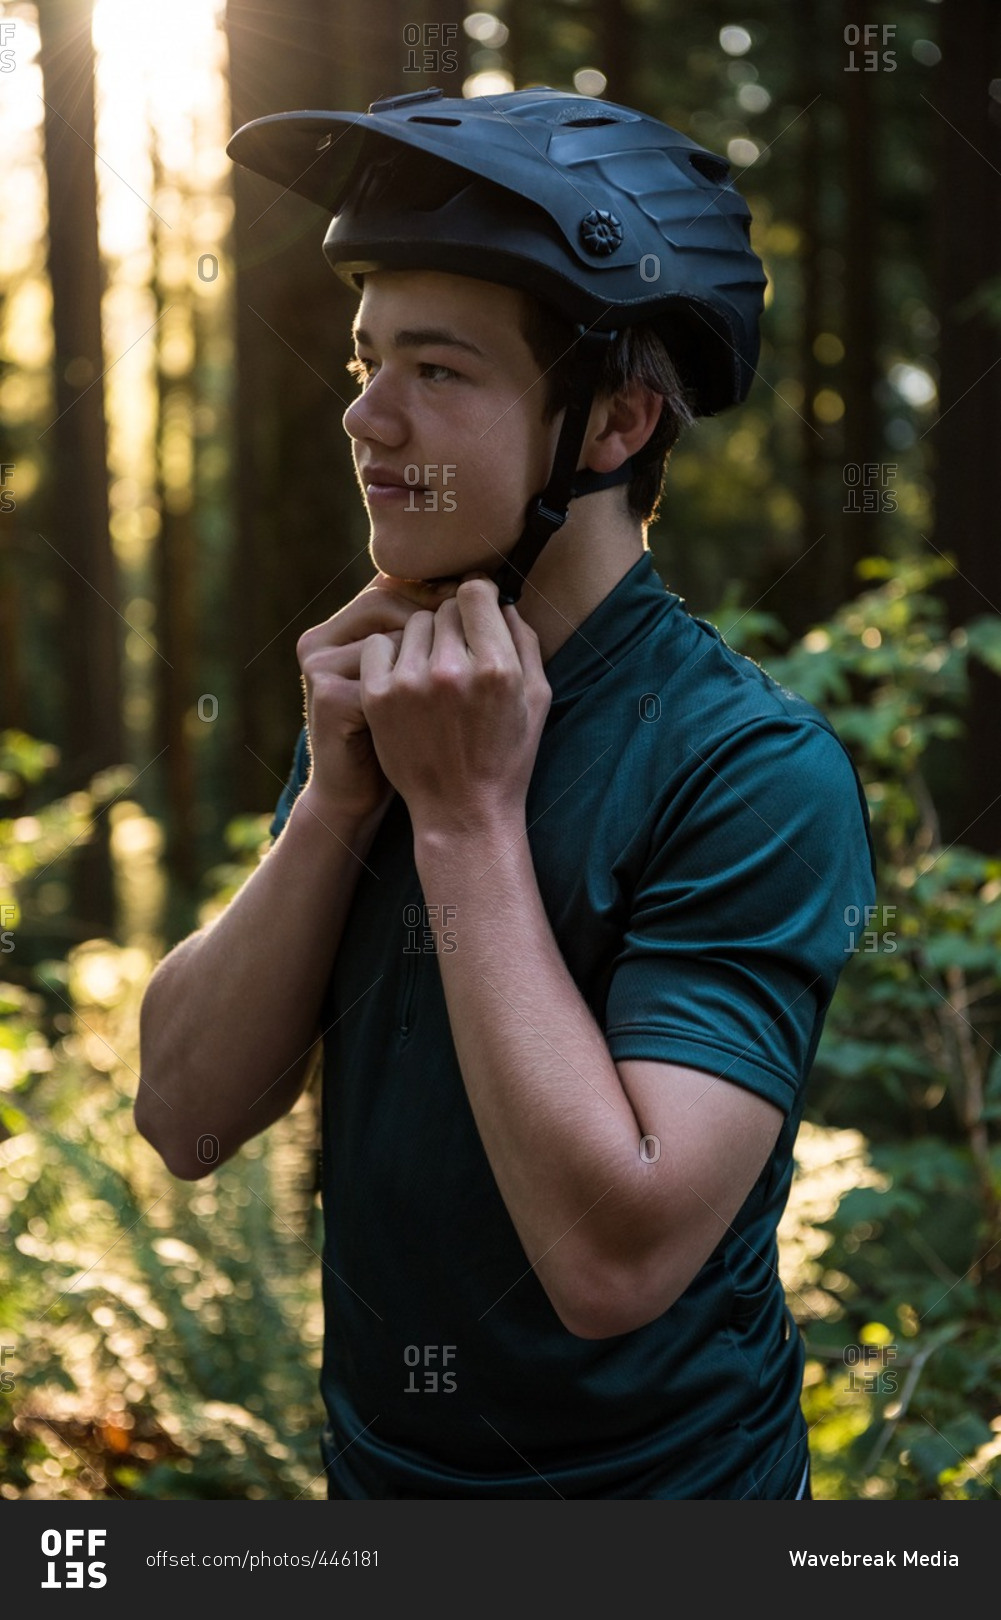 Male athletic wearing bicycle helmet in countryside